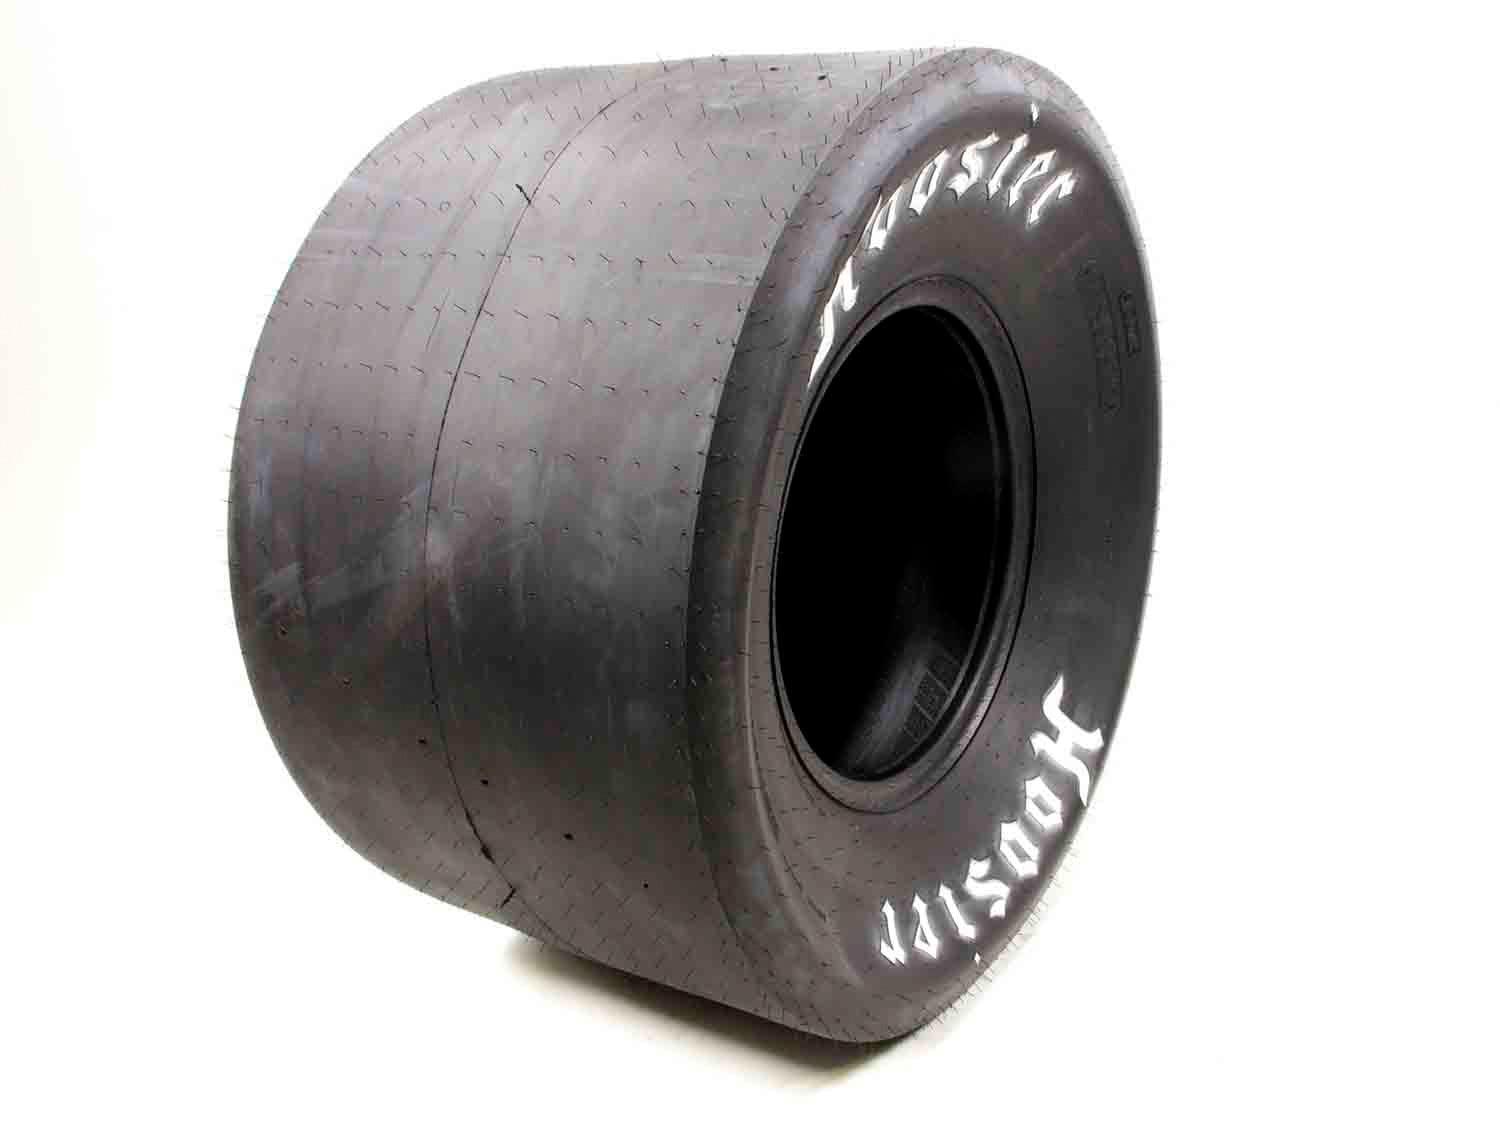 33.5/16-15 Drag Tire - Burlile Performance Products